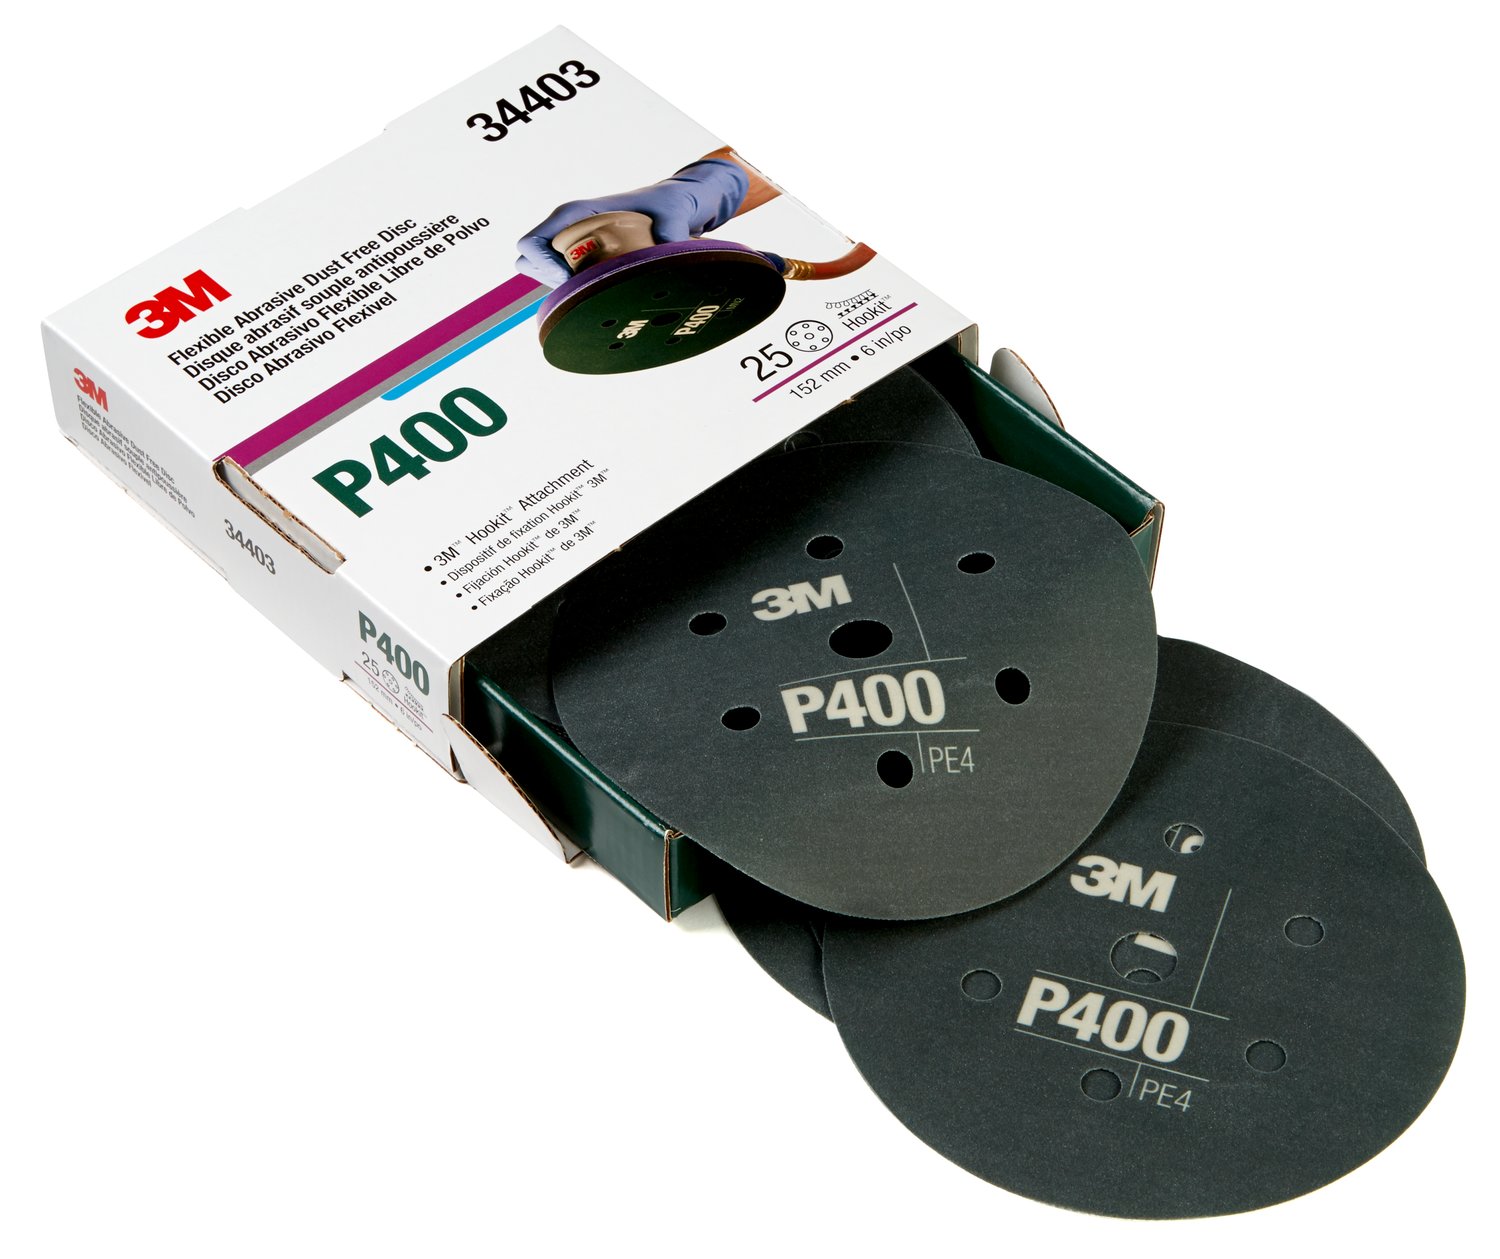 7100180075 - 3M Hookit Flexible Abrasive Disc 270J, 34402, 6 in 7H, Dust Free,
P320, 25 discs per carton, 5 cartons per case